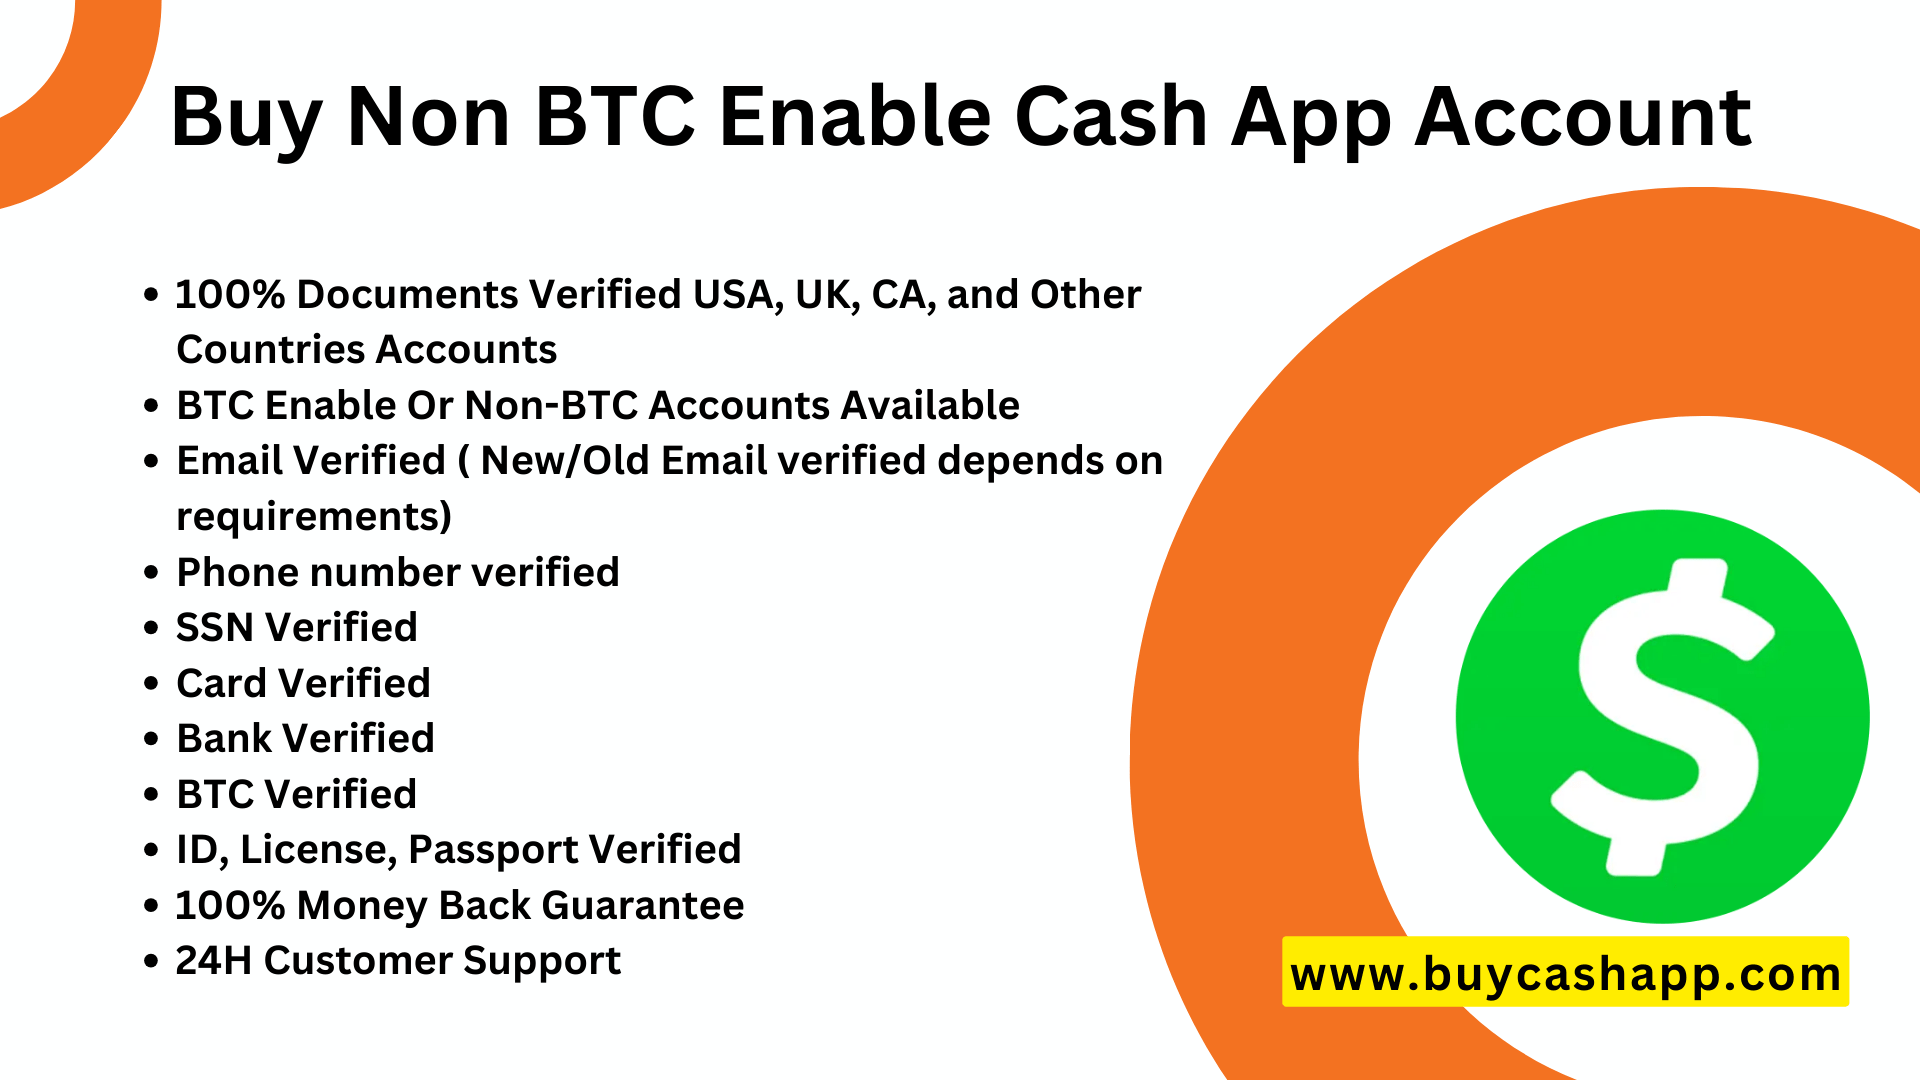 Buy Non BTC Enable Cash App Account
